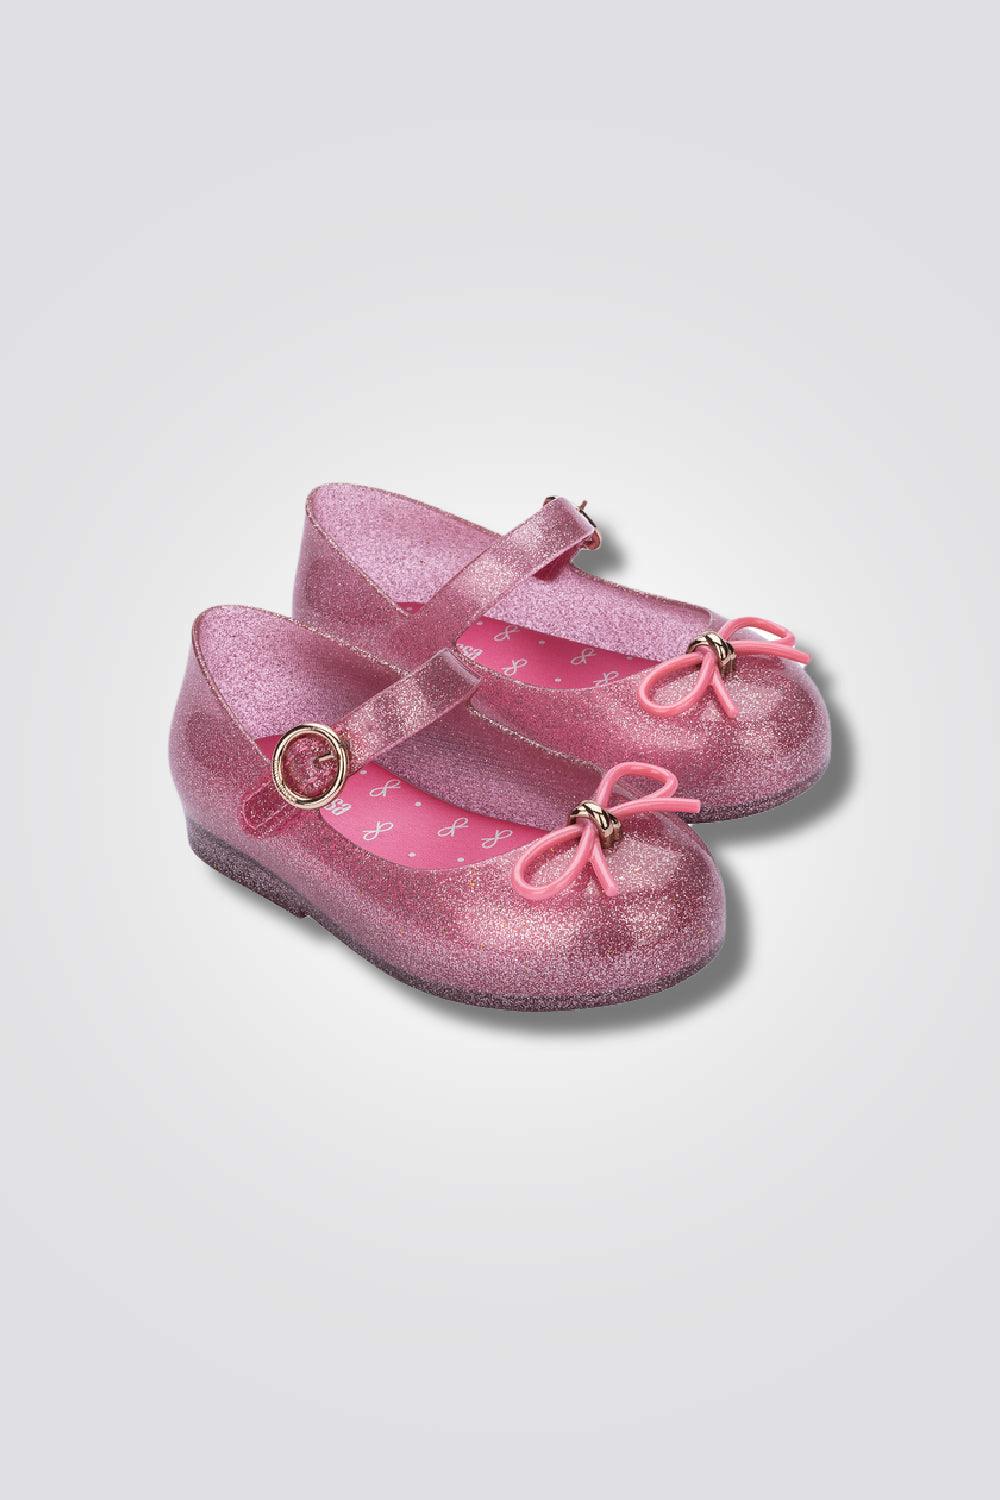 MELISSA - נעלי בובה SWEET LOVE ורוד נצנץ - MASHBIR//365